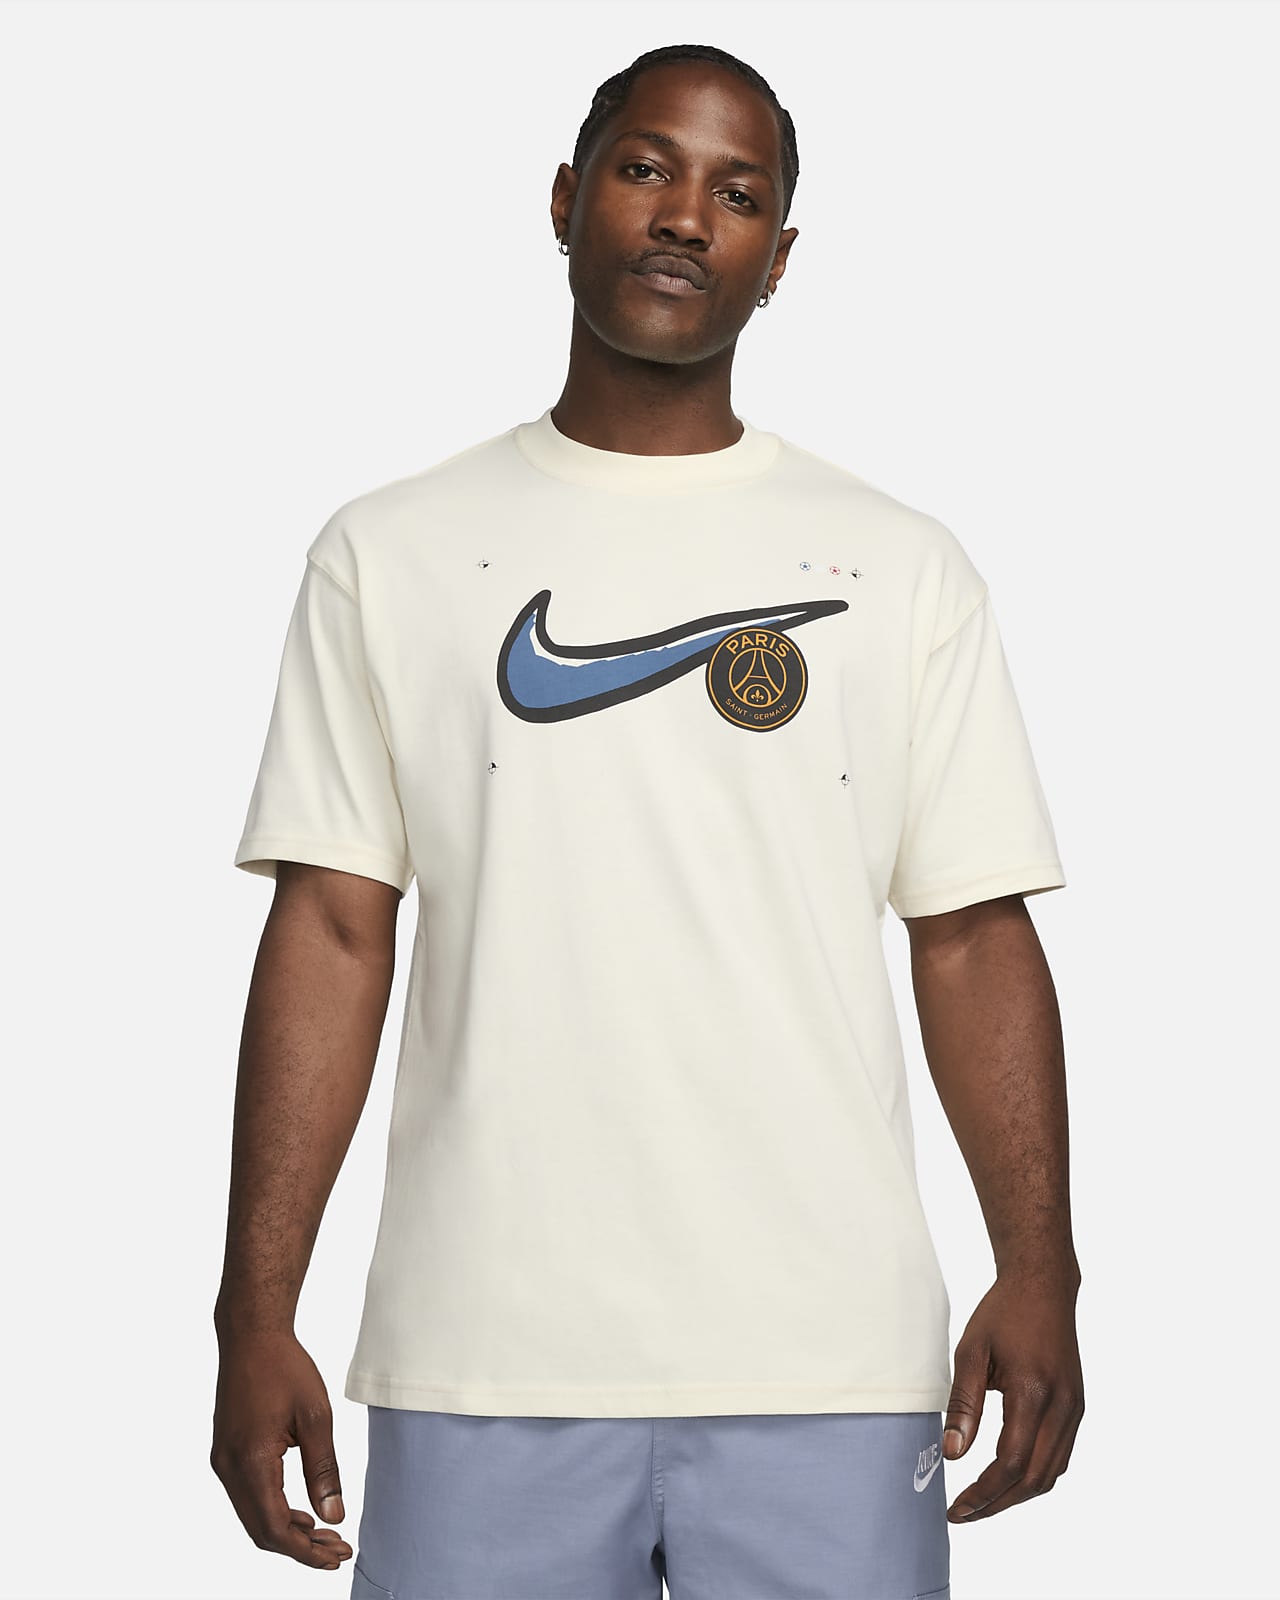 Saint-Germain Max90 Men's Nike Football T-Shirt. LU